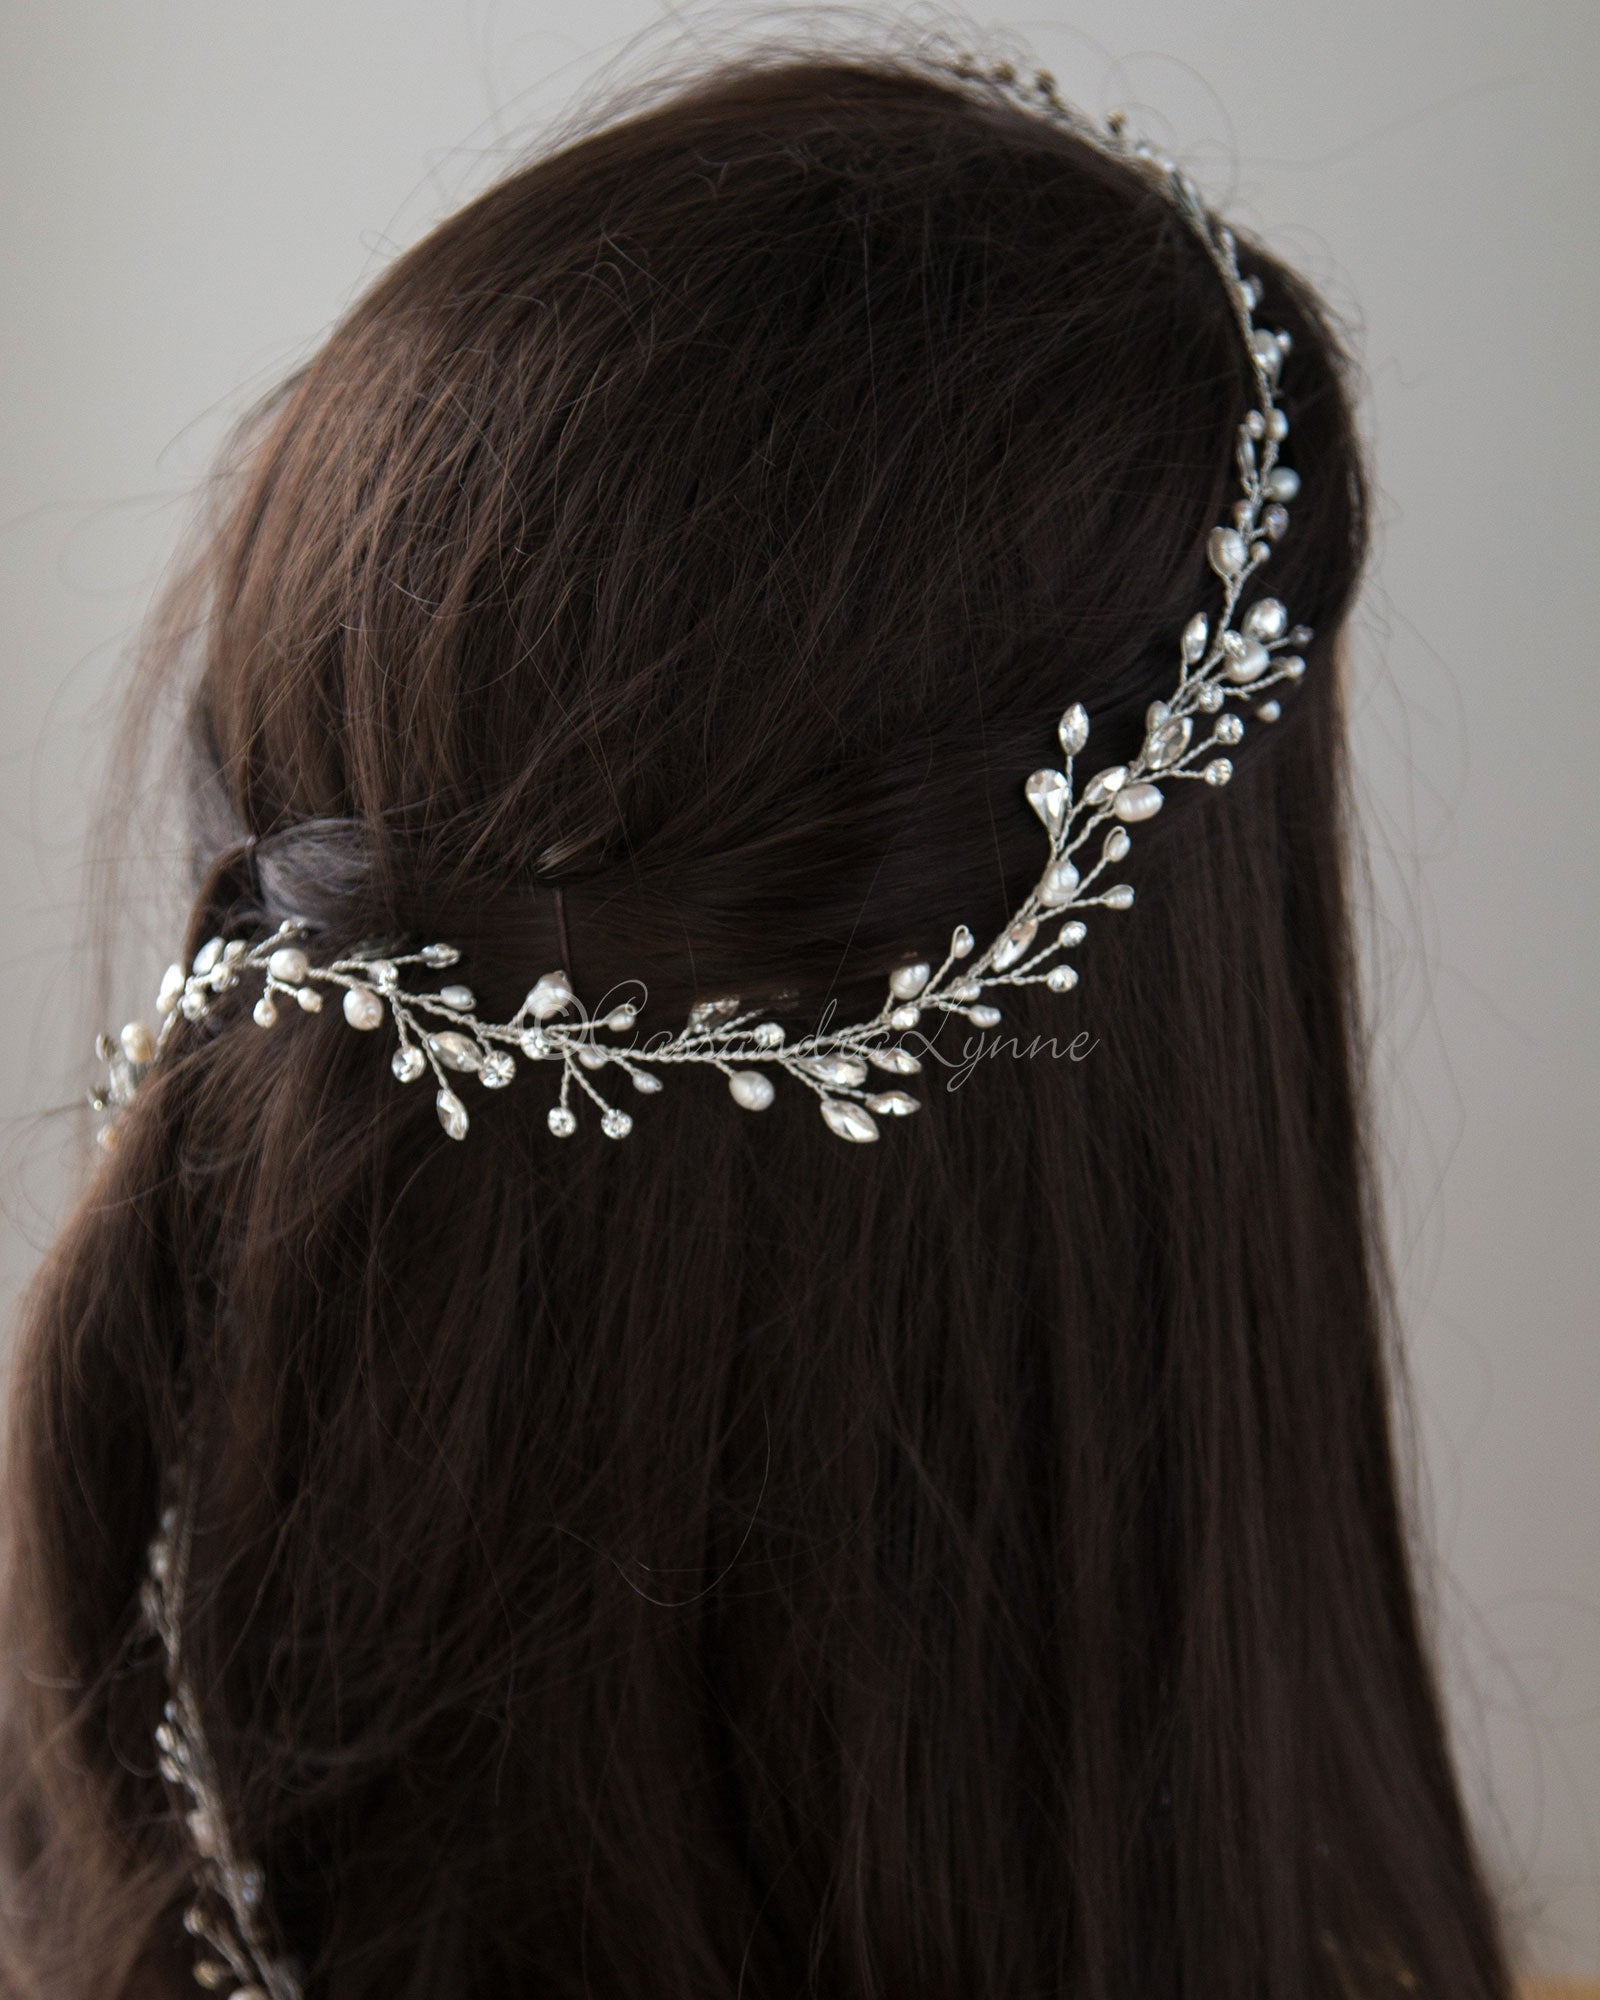 Pearl Bridal Hair Vine with Pear Jewels - Cassandra Lynne